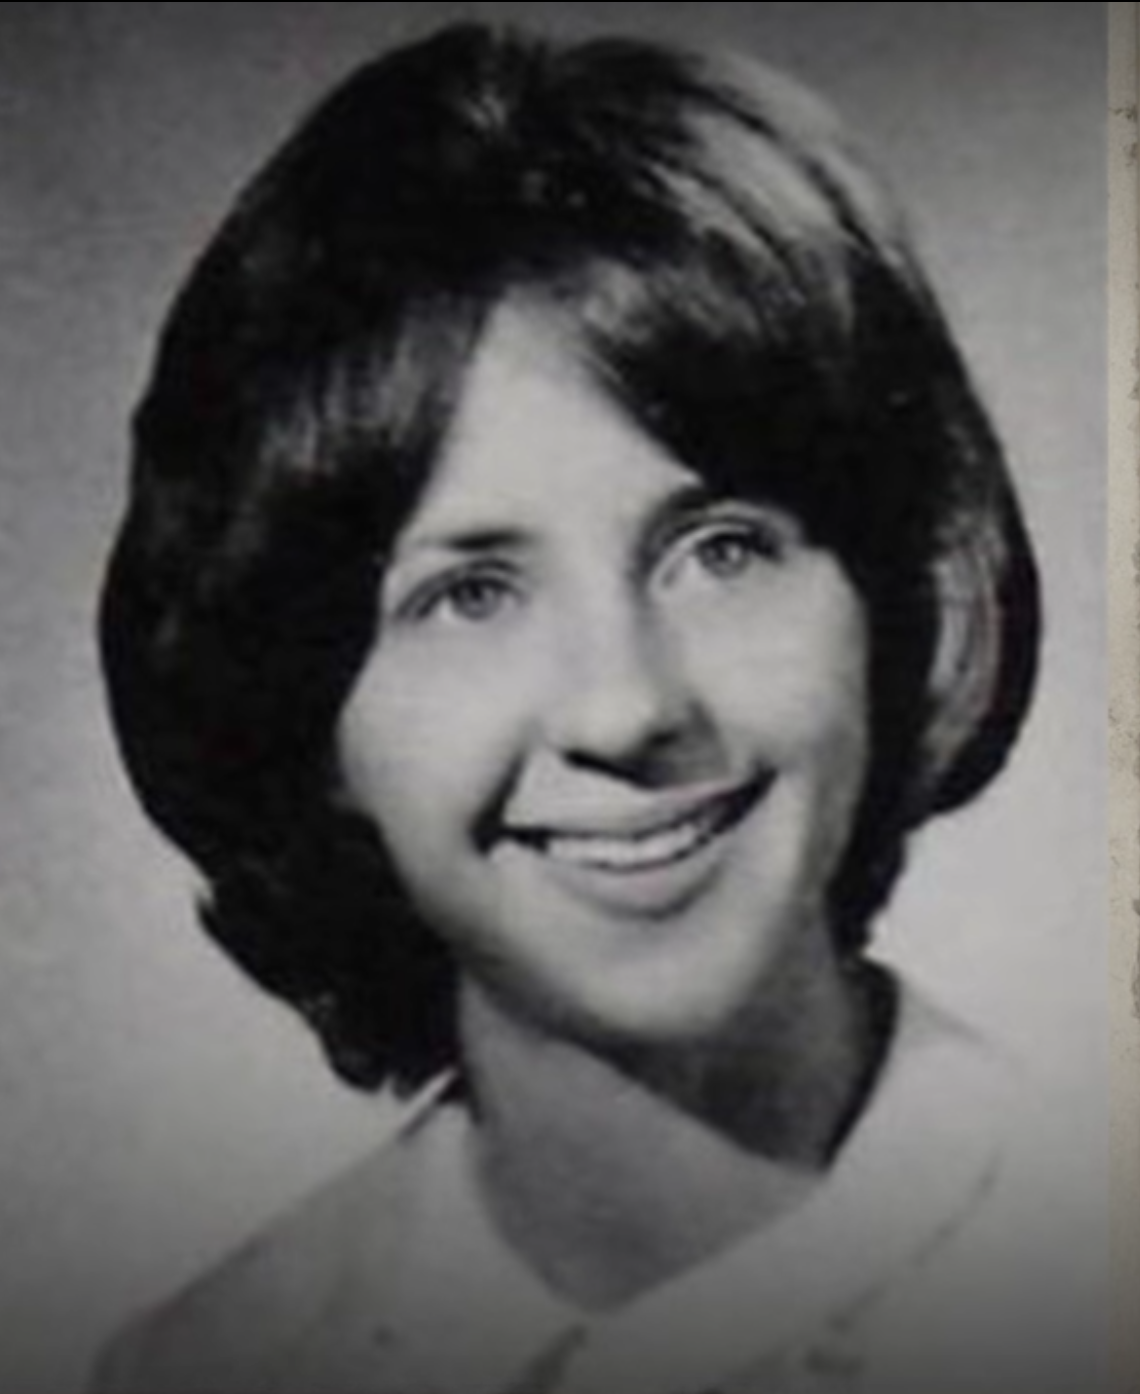 Biografi Profil Biodata Biography Elizabeth Kloepfer dan Ted Bundy